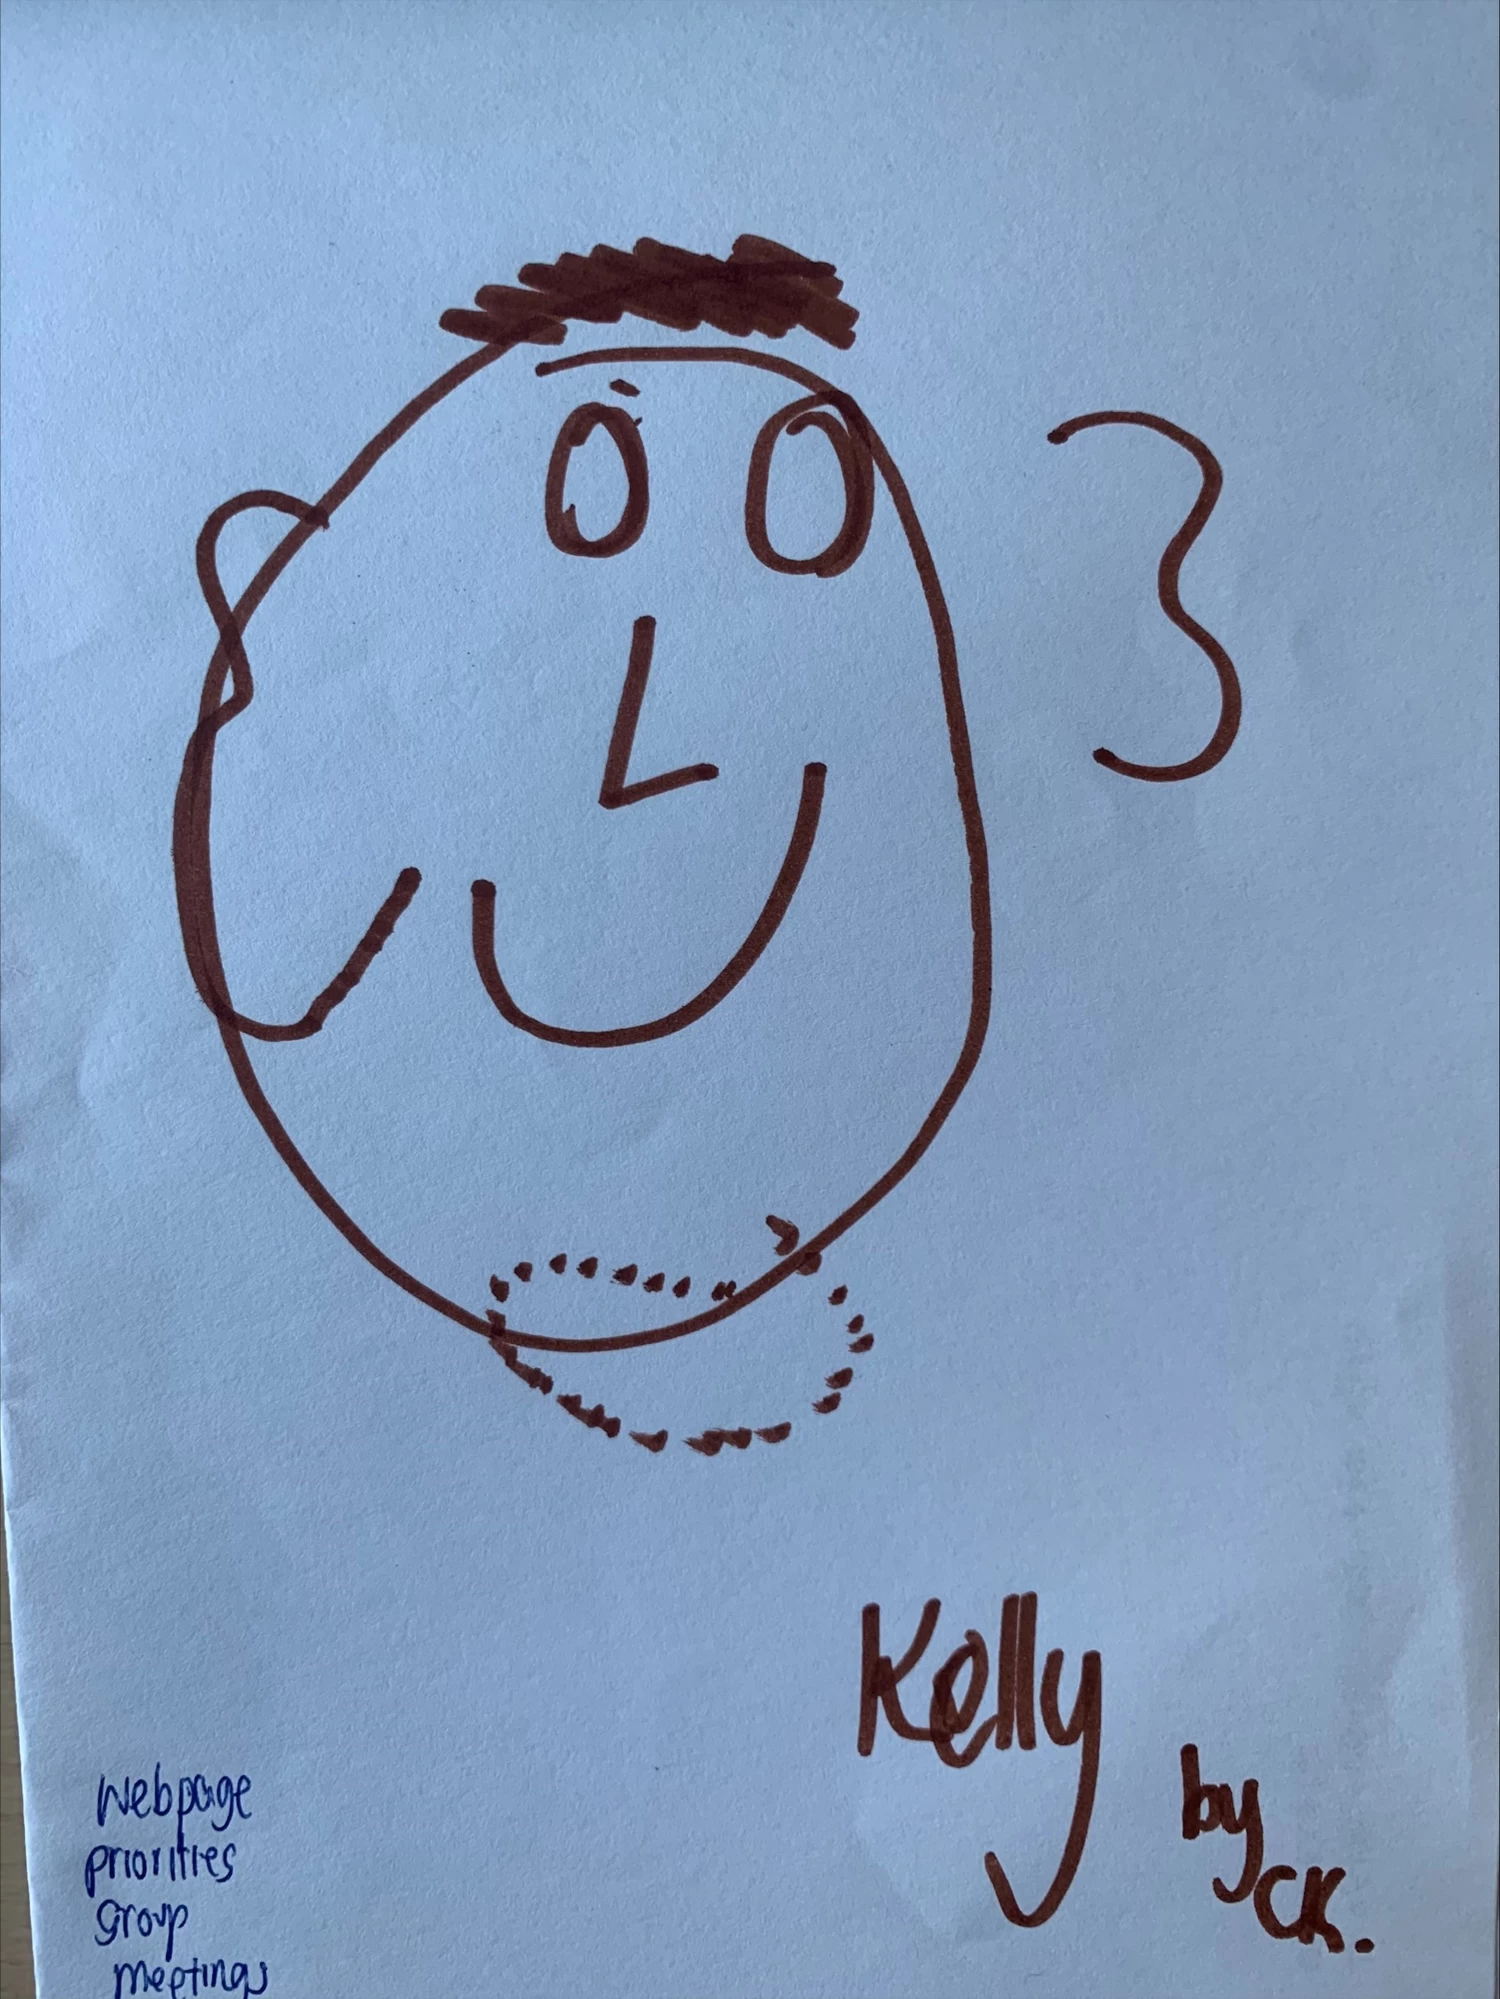 Carina King's portrait of Kelly Elimian.